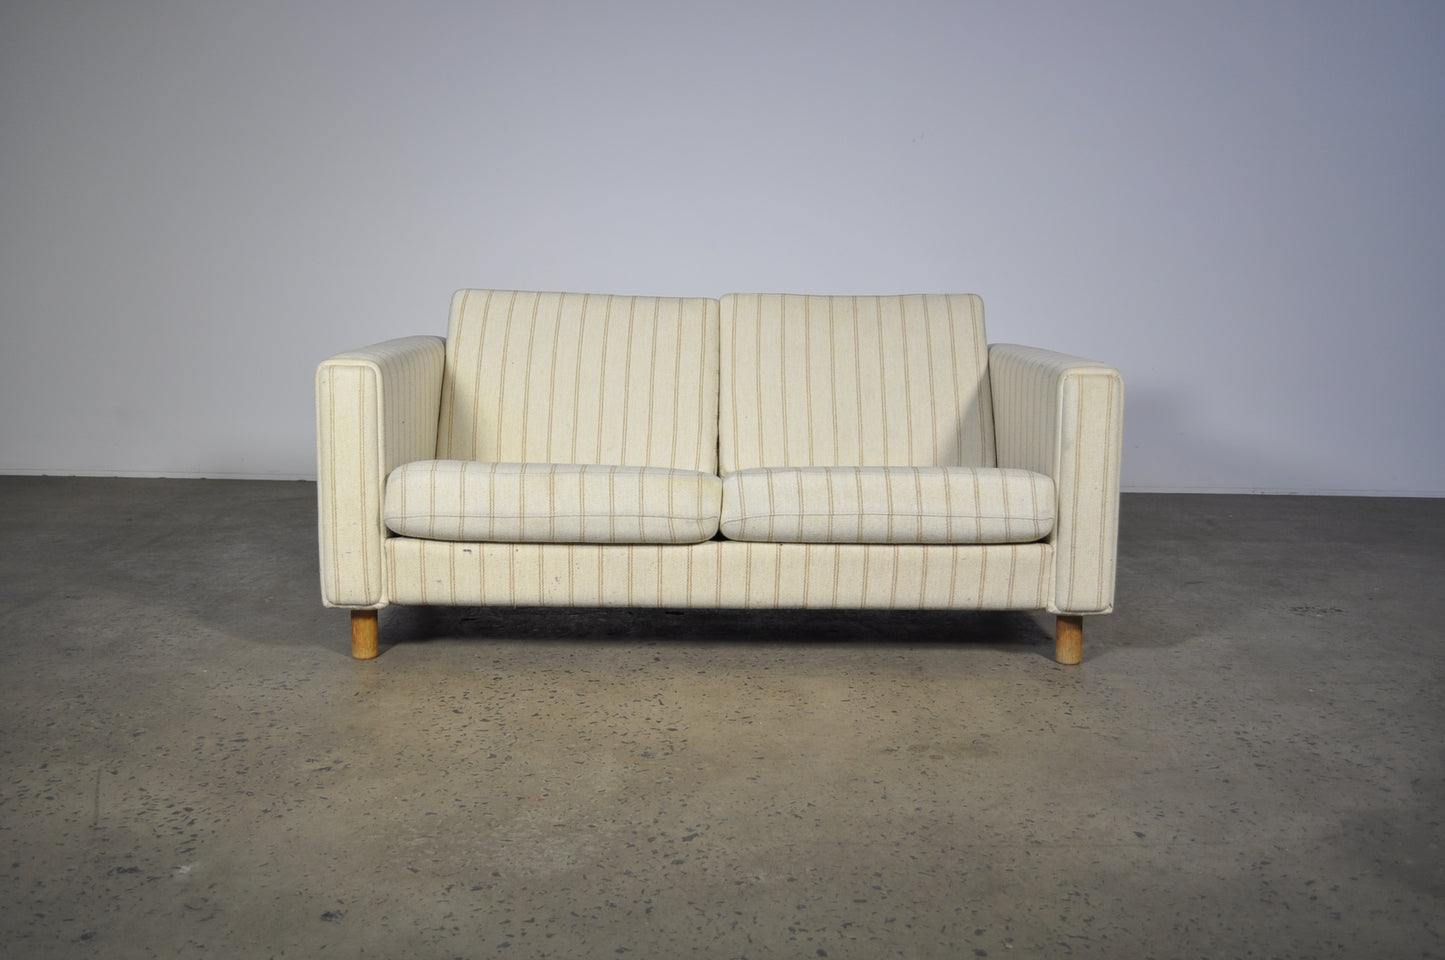 Hans J.Wegner Century 2000 sofa by GETAMA.